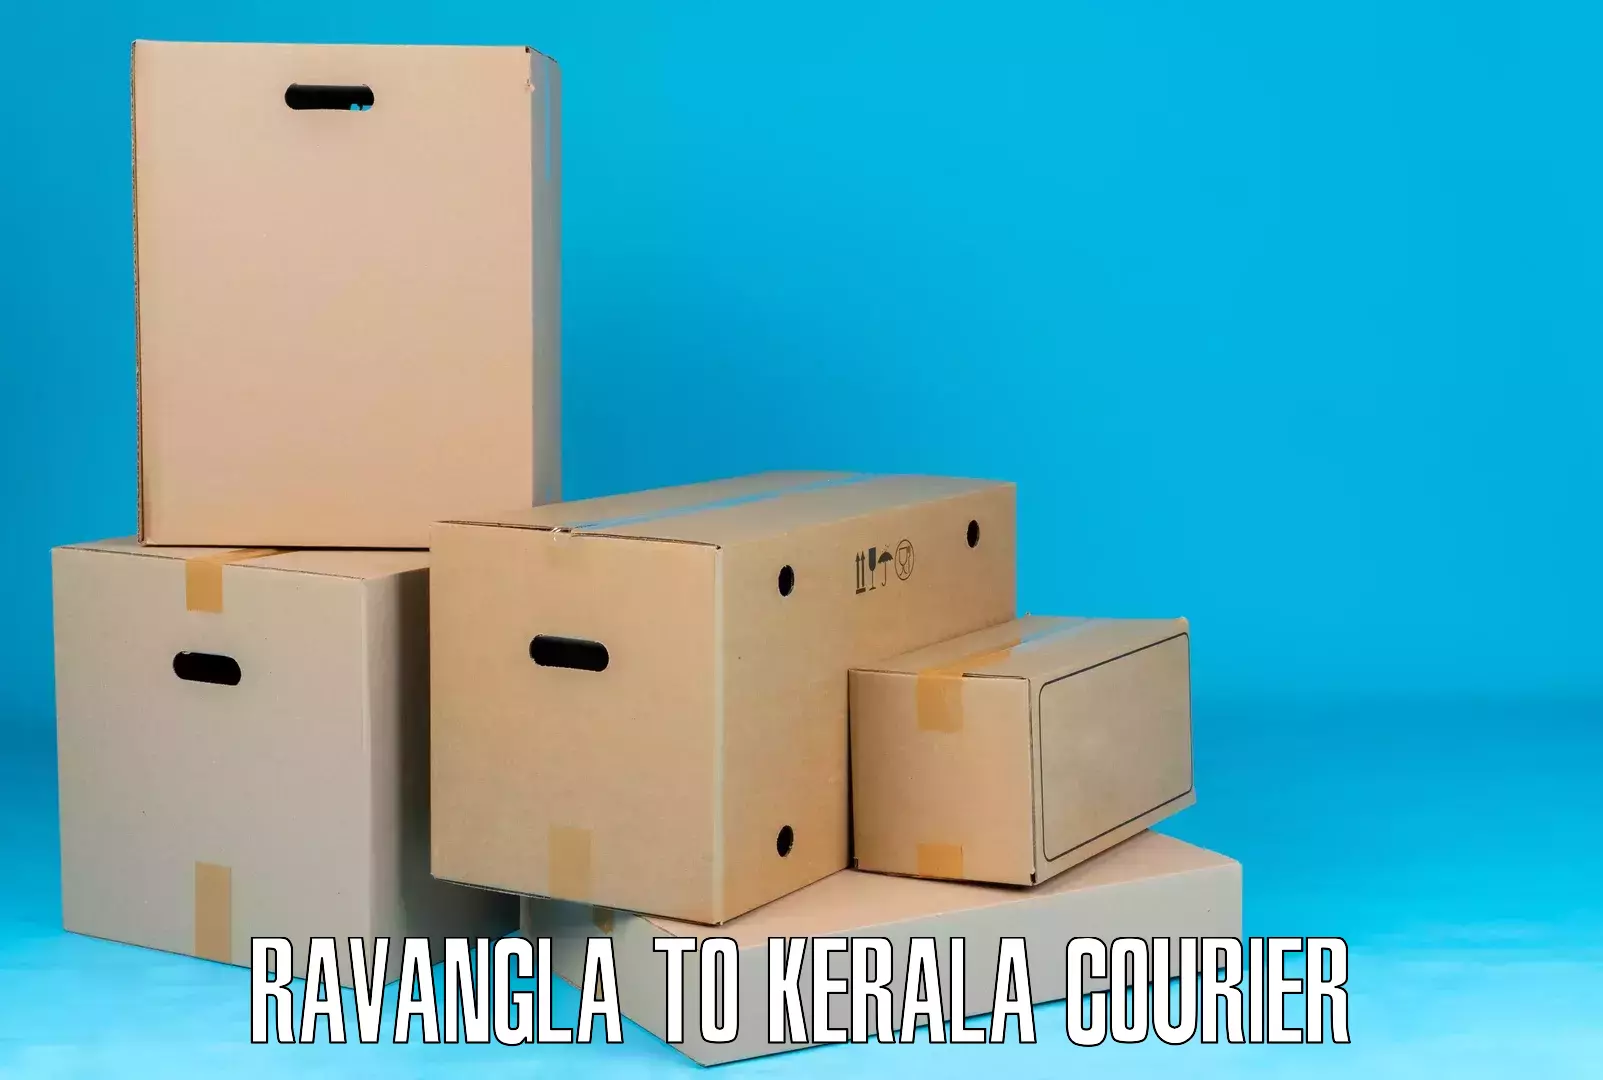 Enhanced delivery experience in Ravangla to Thiruvananthapuram